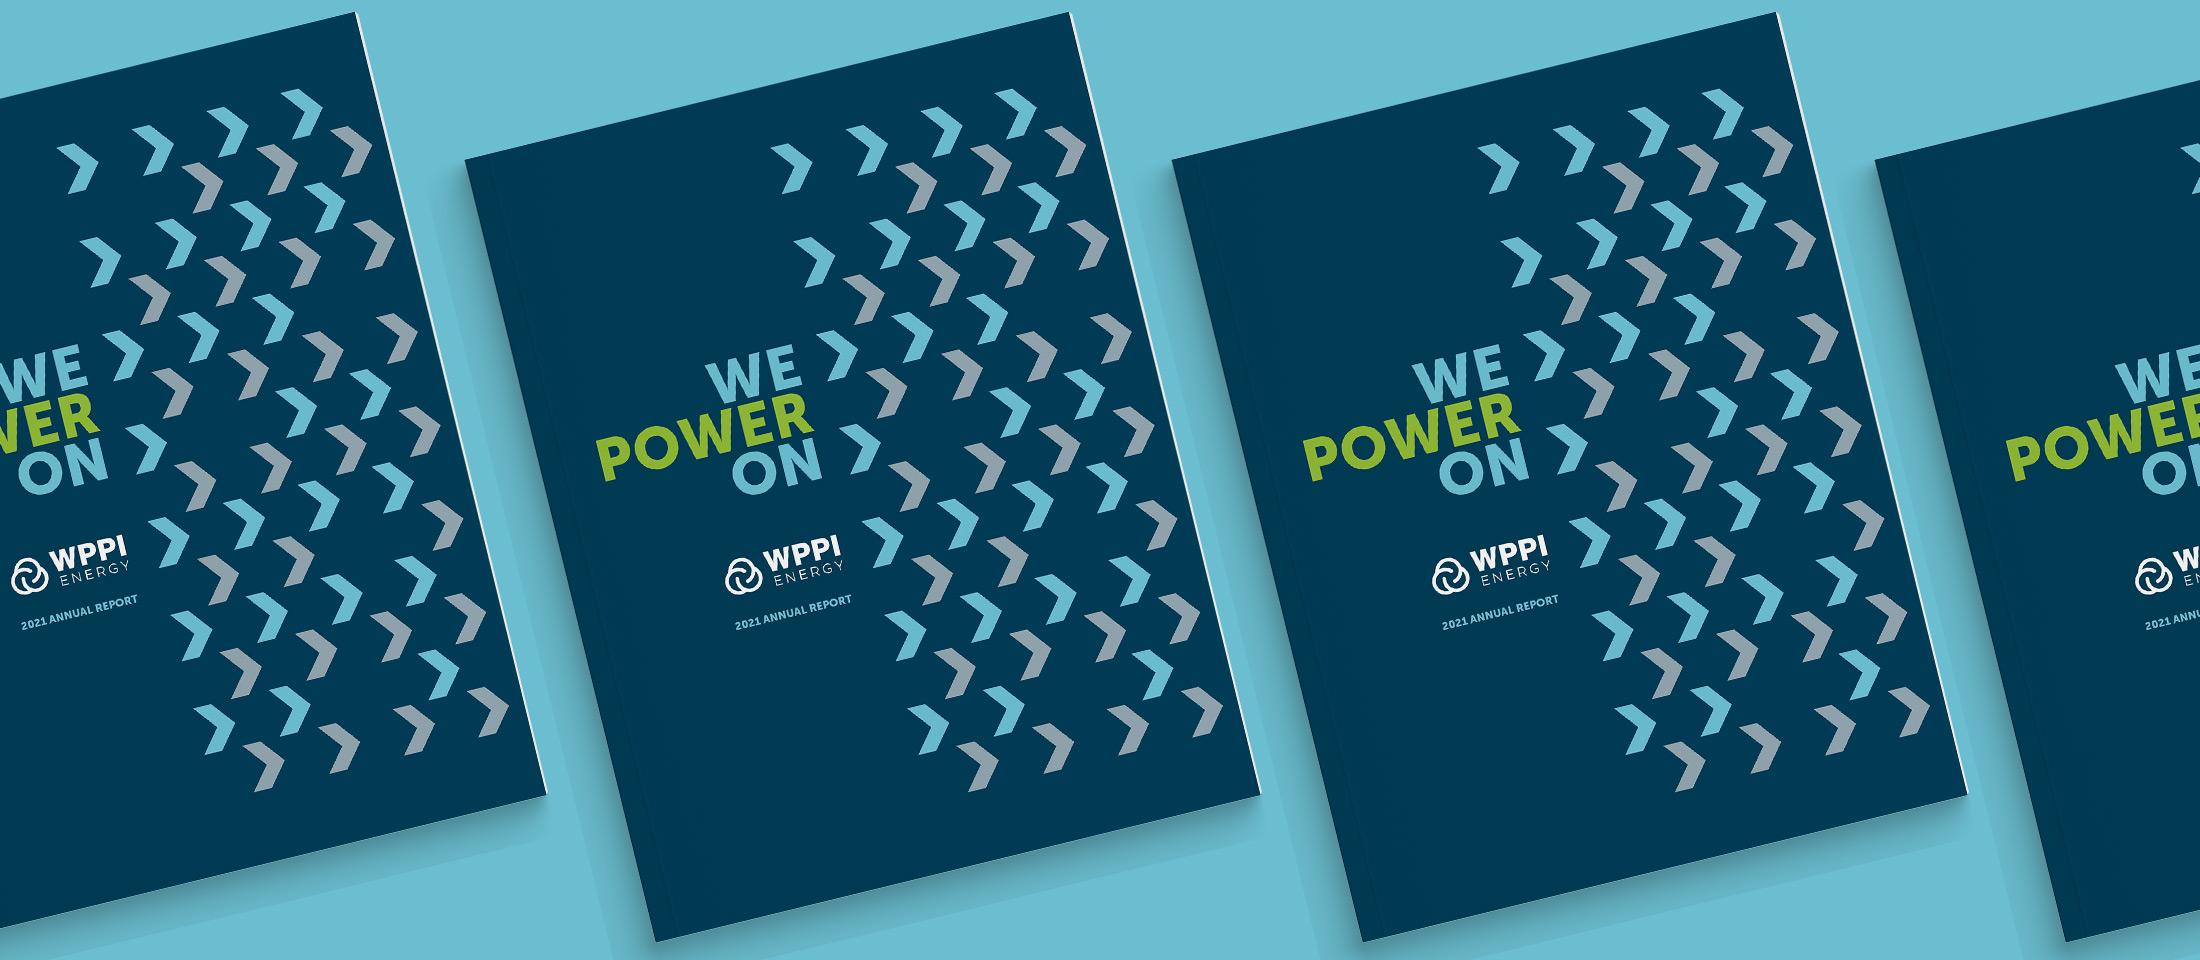 WPPI Energy Annual Report Design